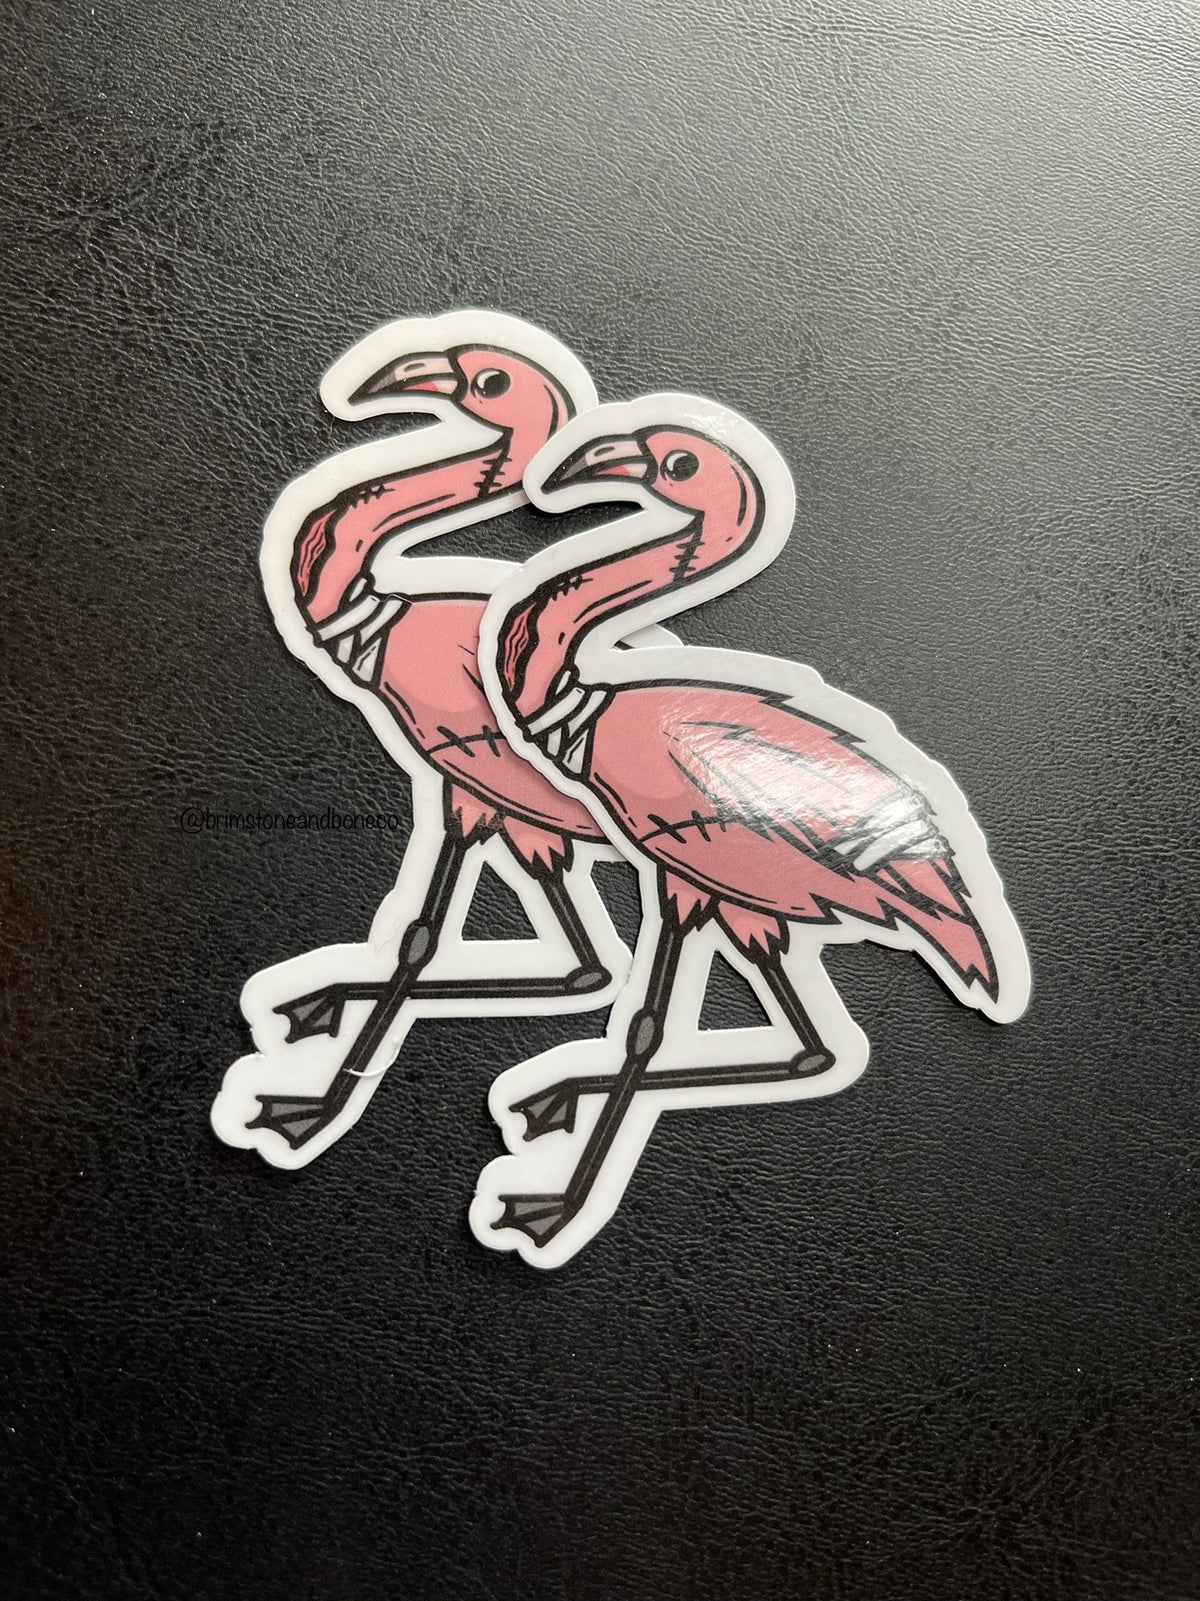 Undead Flamingo Vinyl Sticker